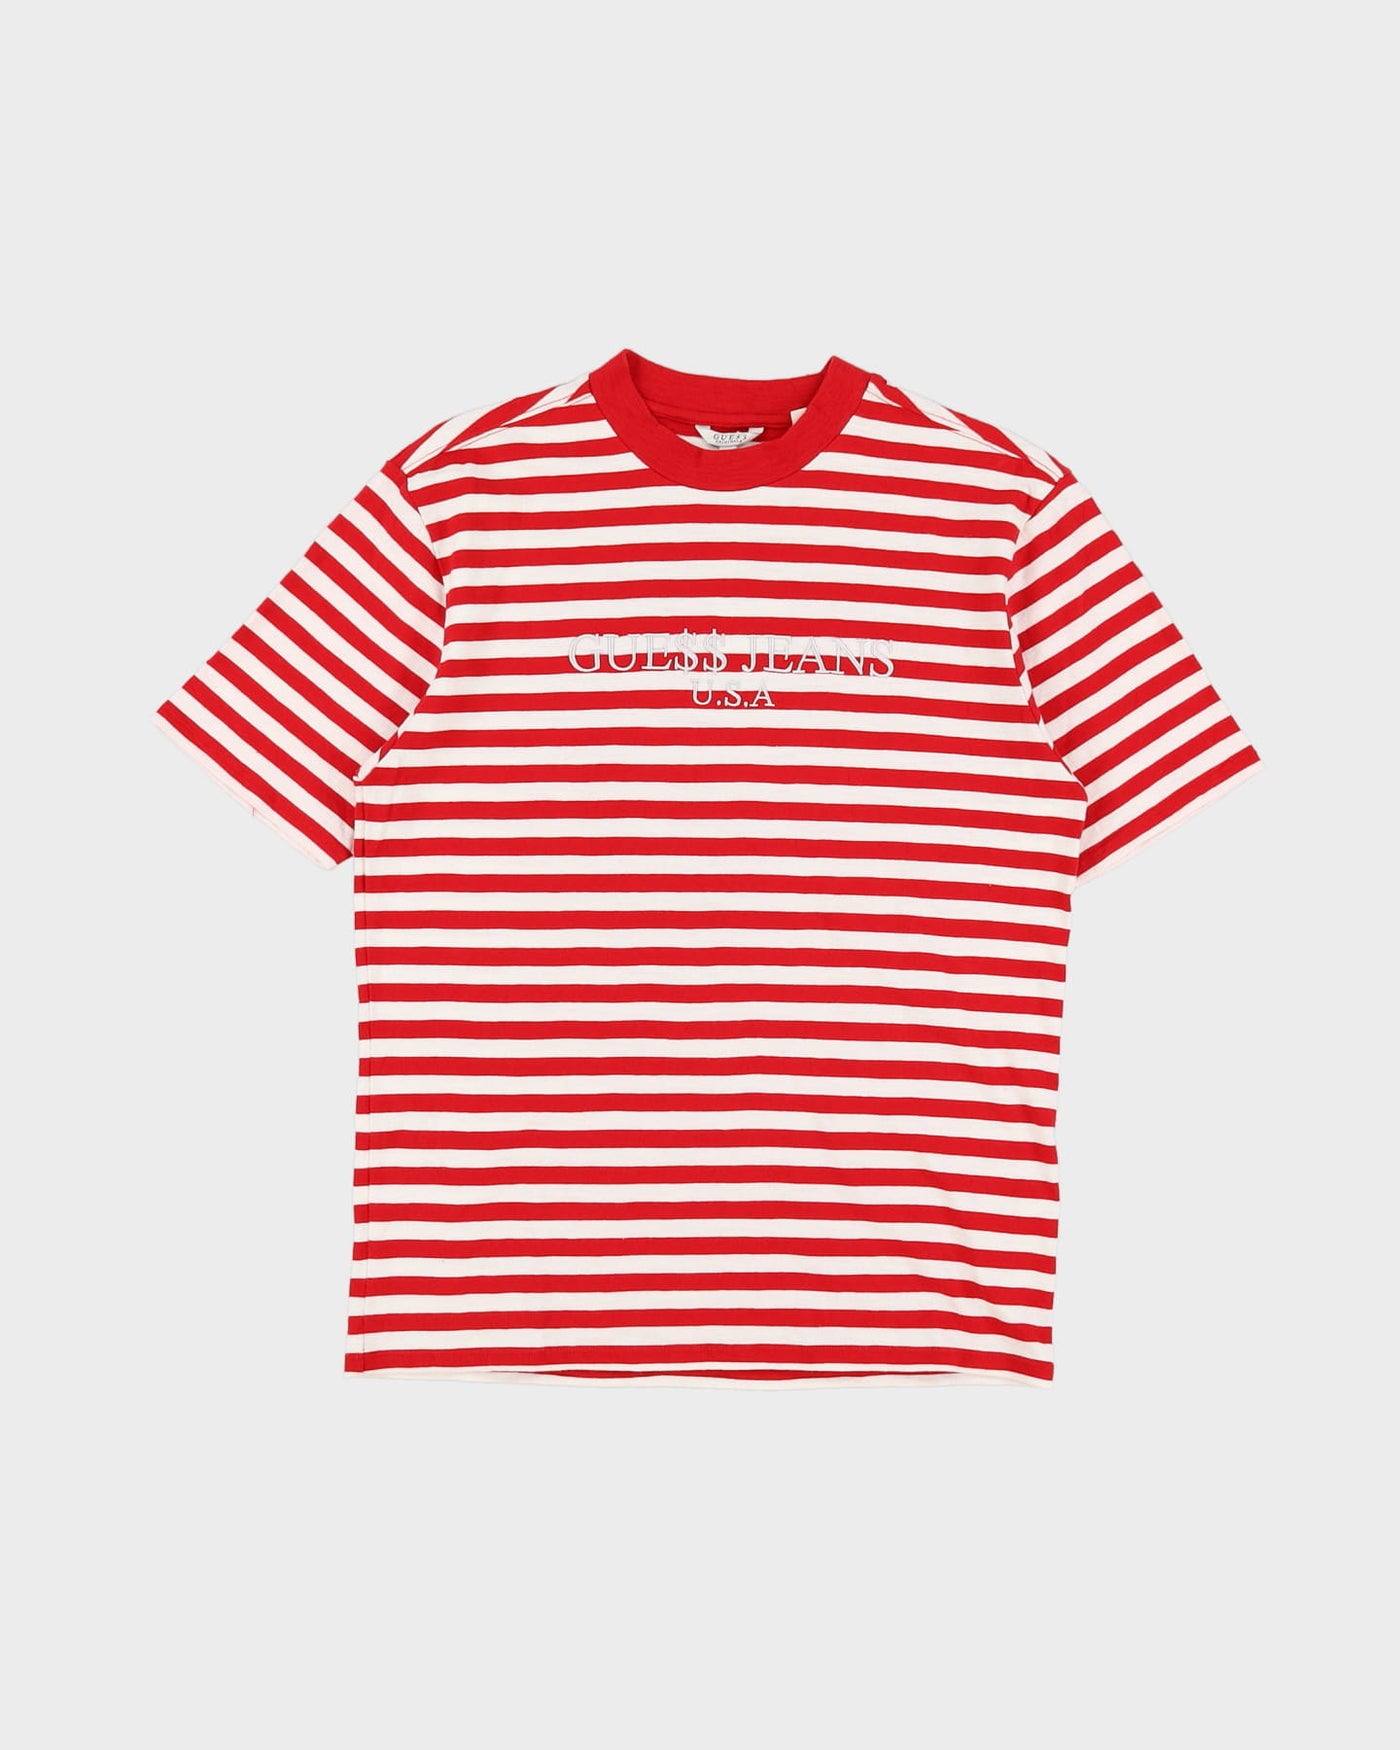 løbetur forælder stavelse Guess X ASAP Rocky White / Red Striped T-Shirt - S – Rokit